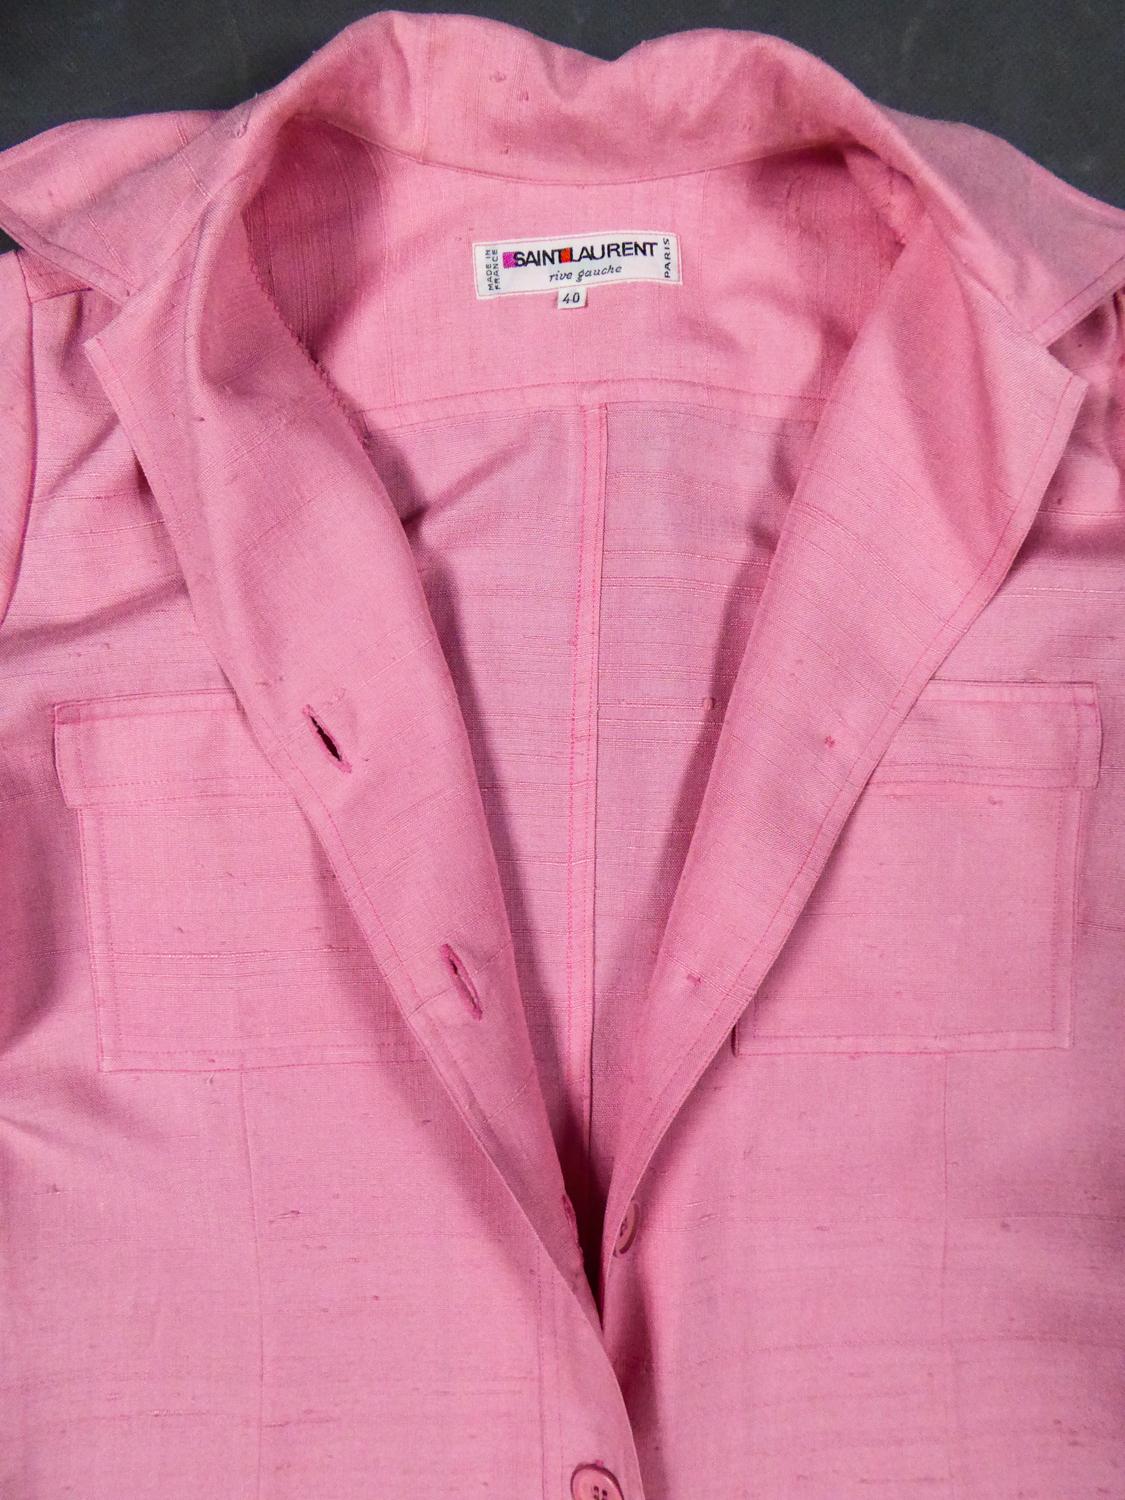 Pink An Yves Saint Laurent Rive Gauche Blouse Saharian Style Dress Circa 1980